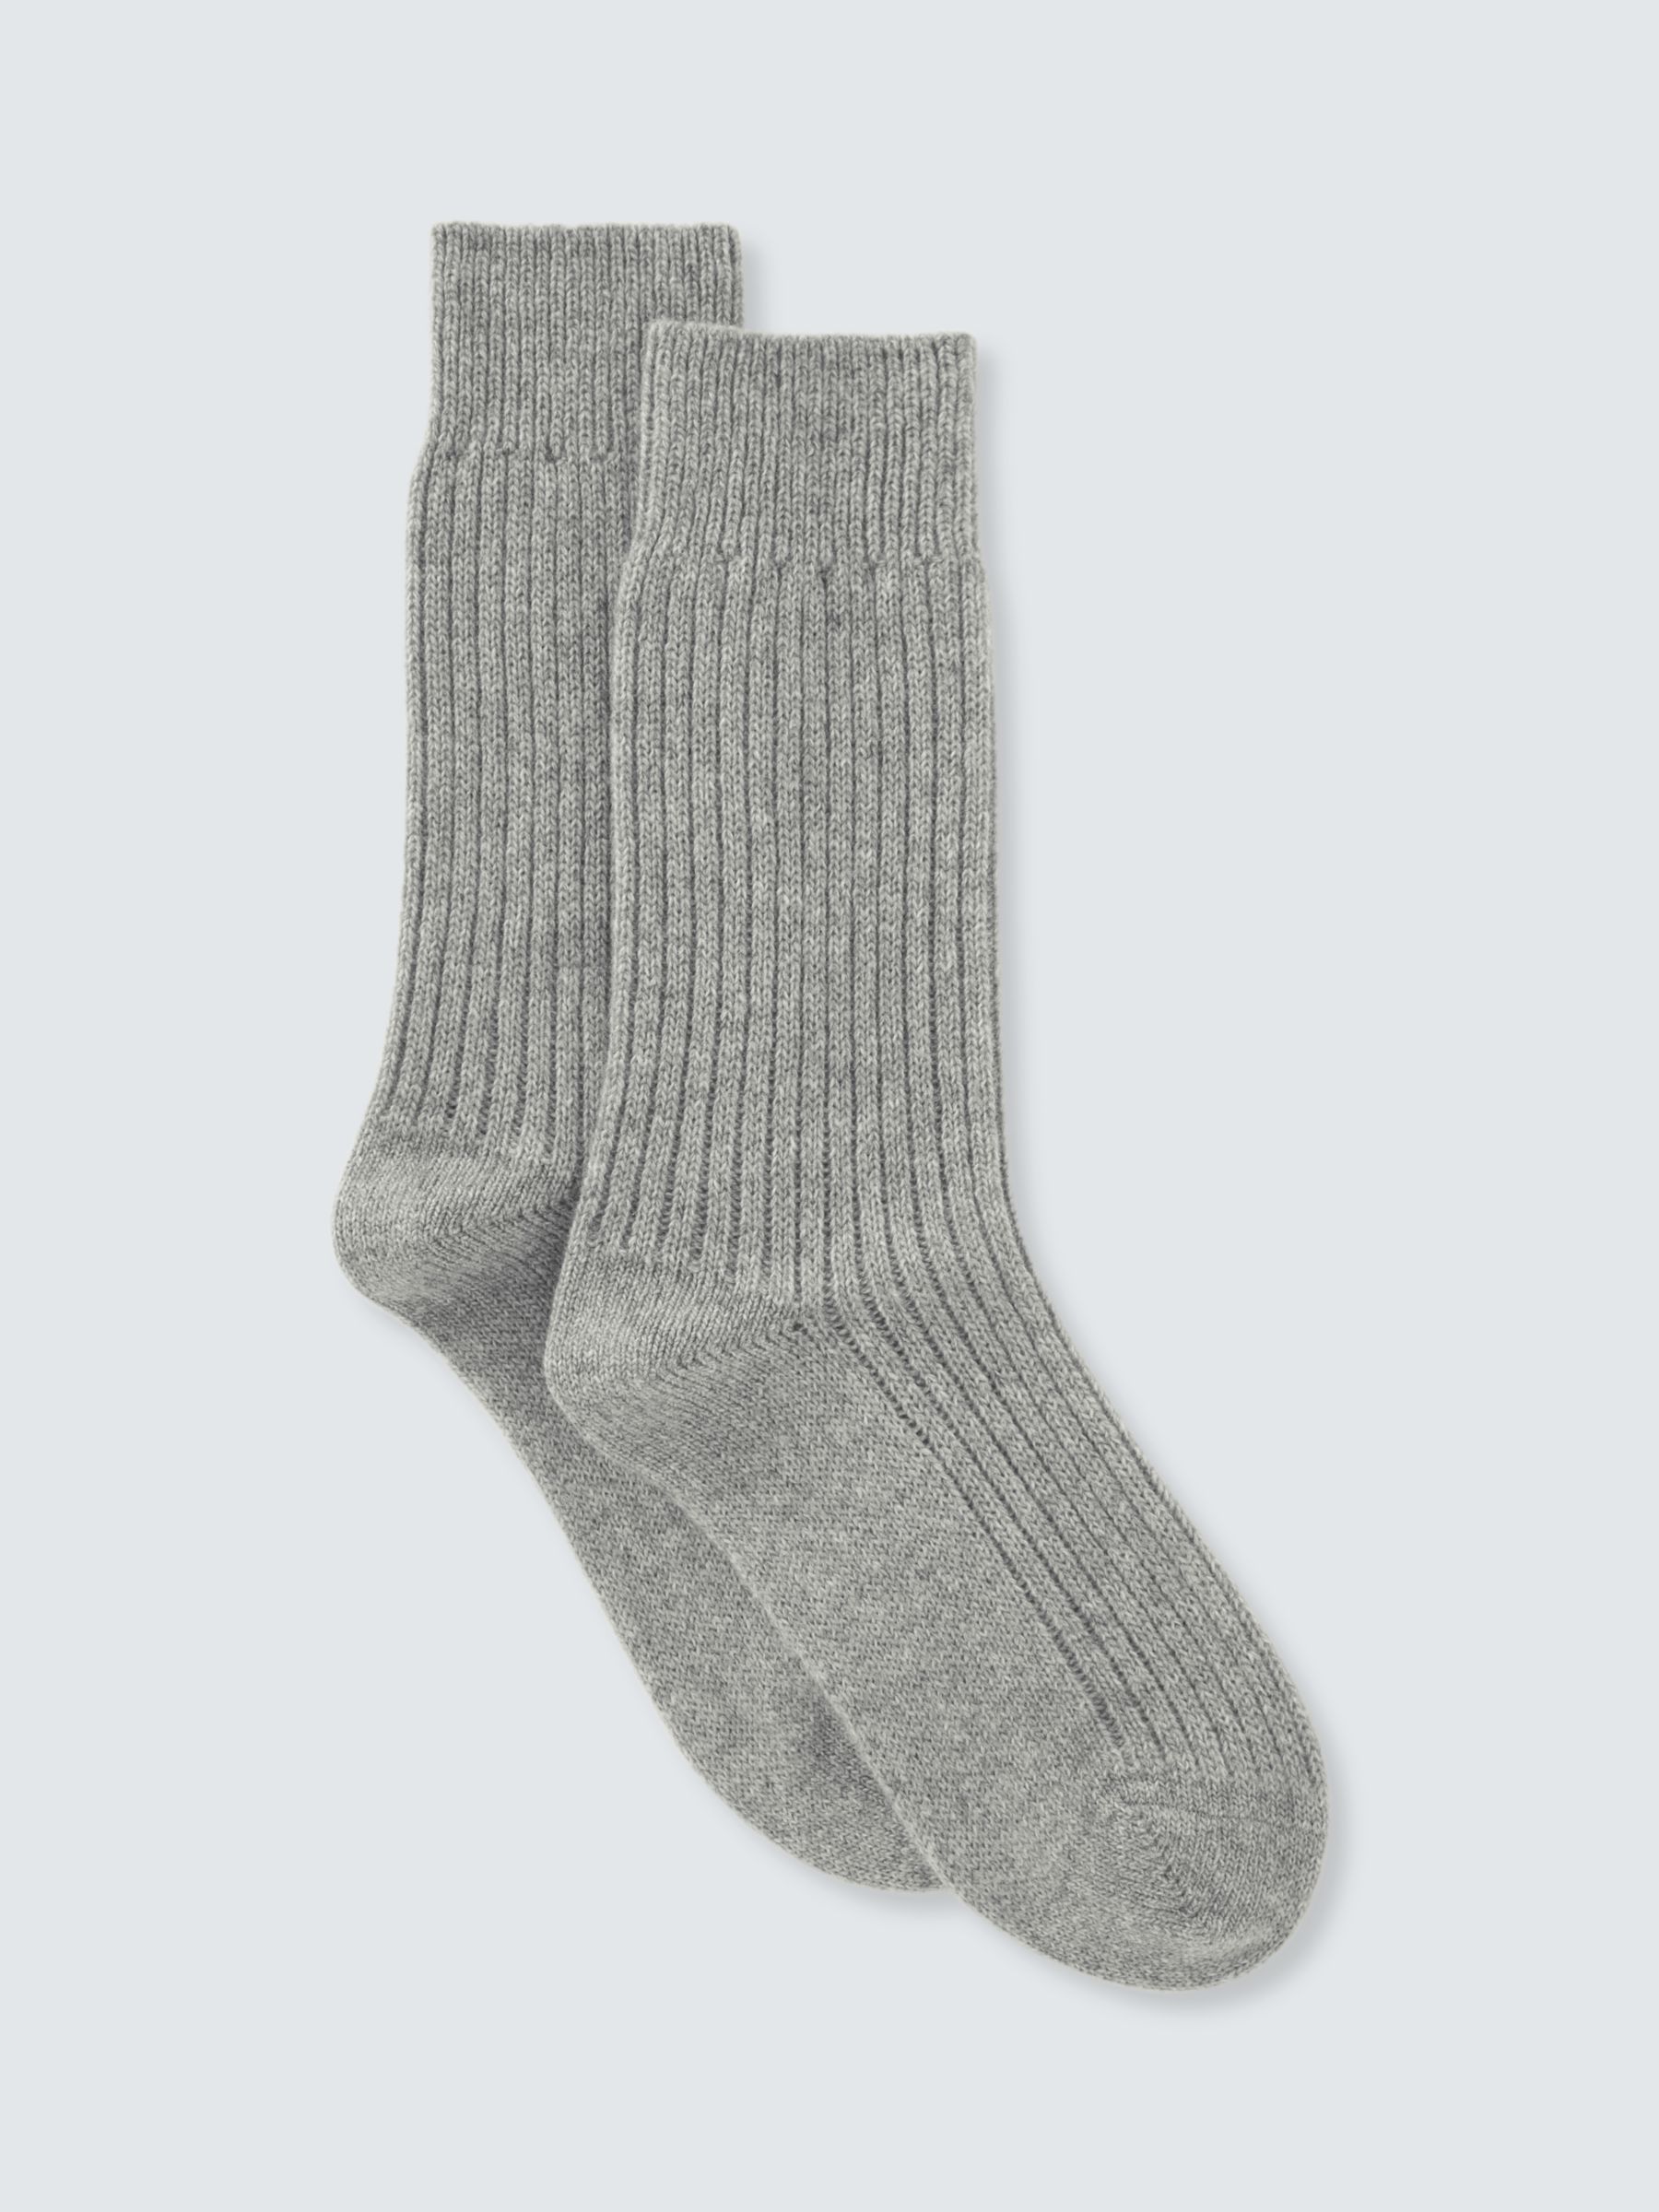 John Lewis Cashmere Rich Bed Socks, Grey, S-M